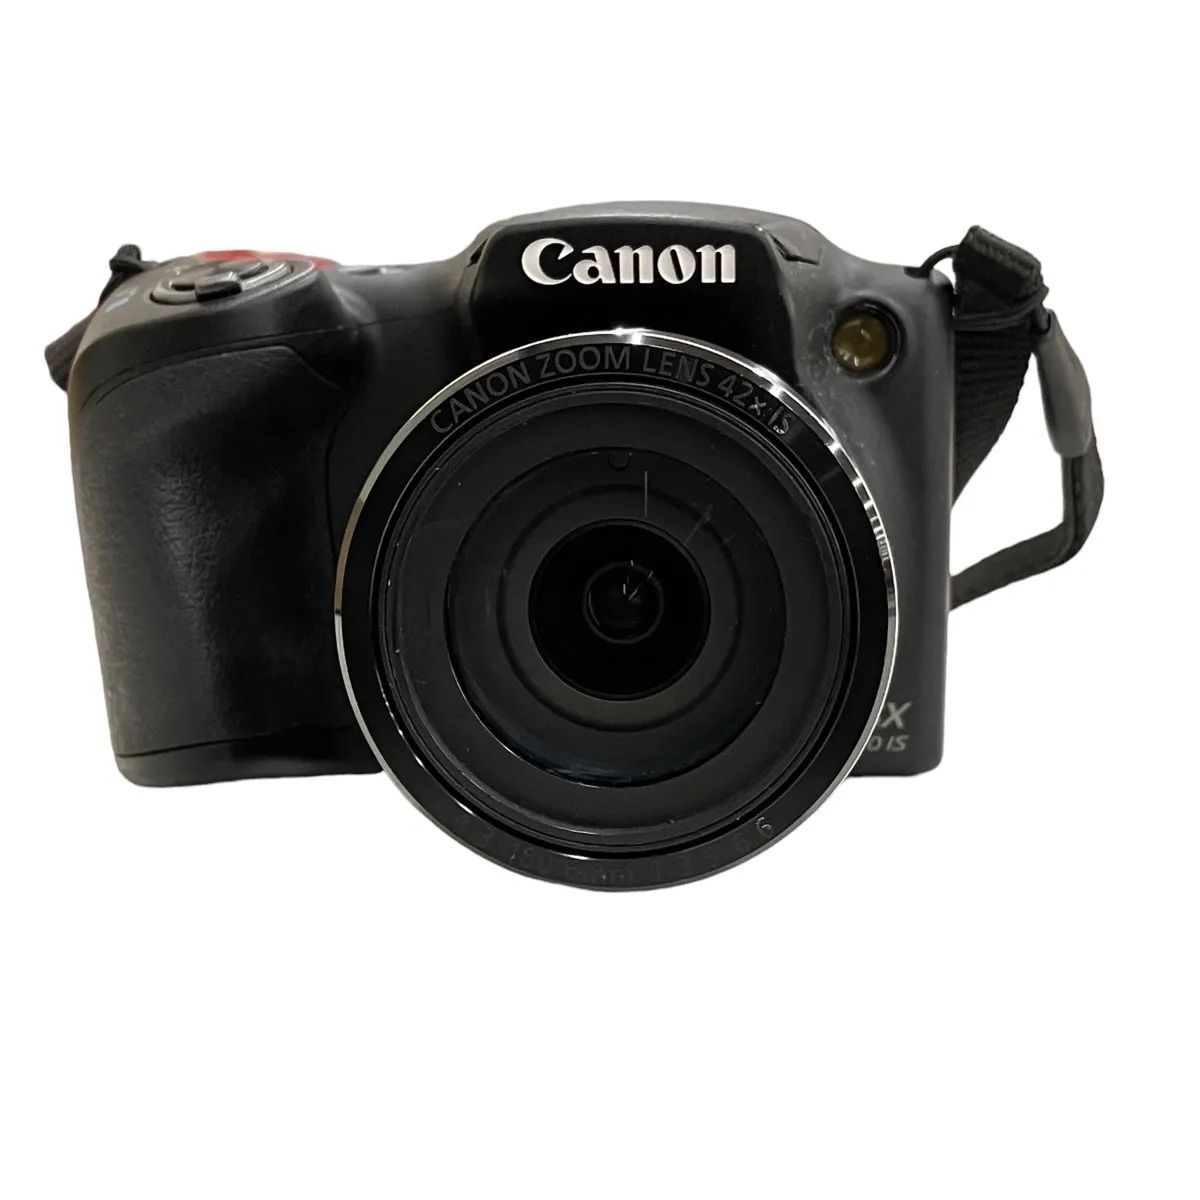 Wi-Fi・光学42倍】 Canon PowerShot SX420 IS - デジタルカメラ